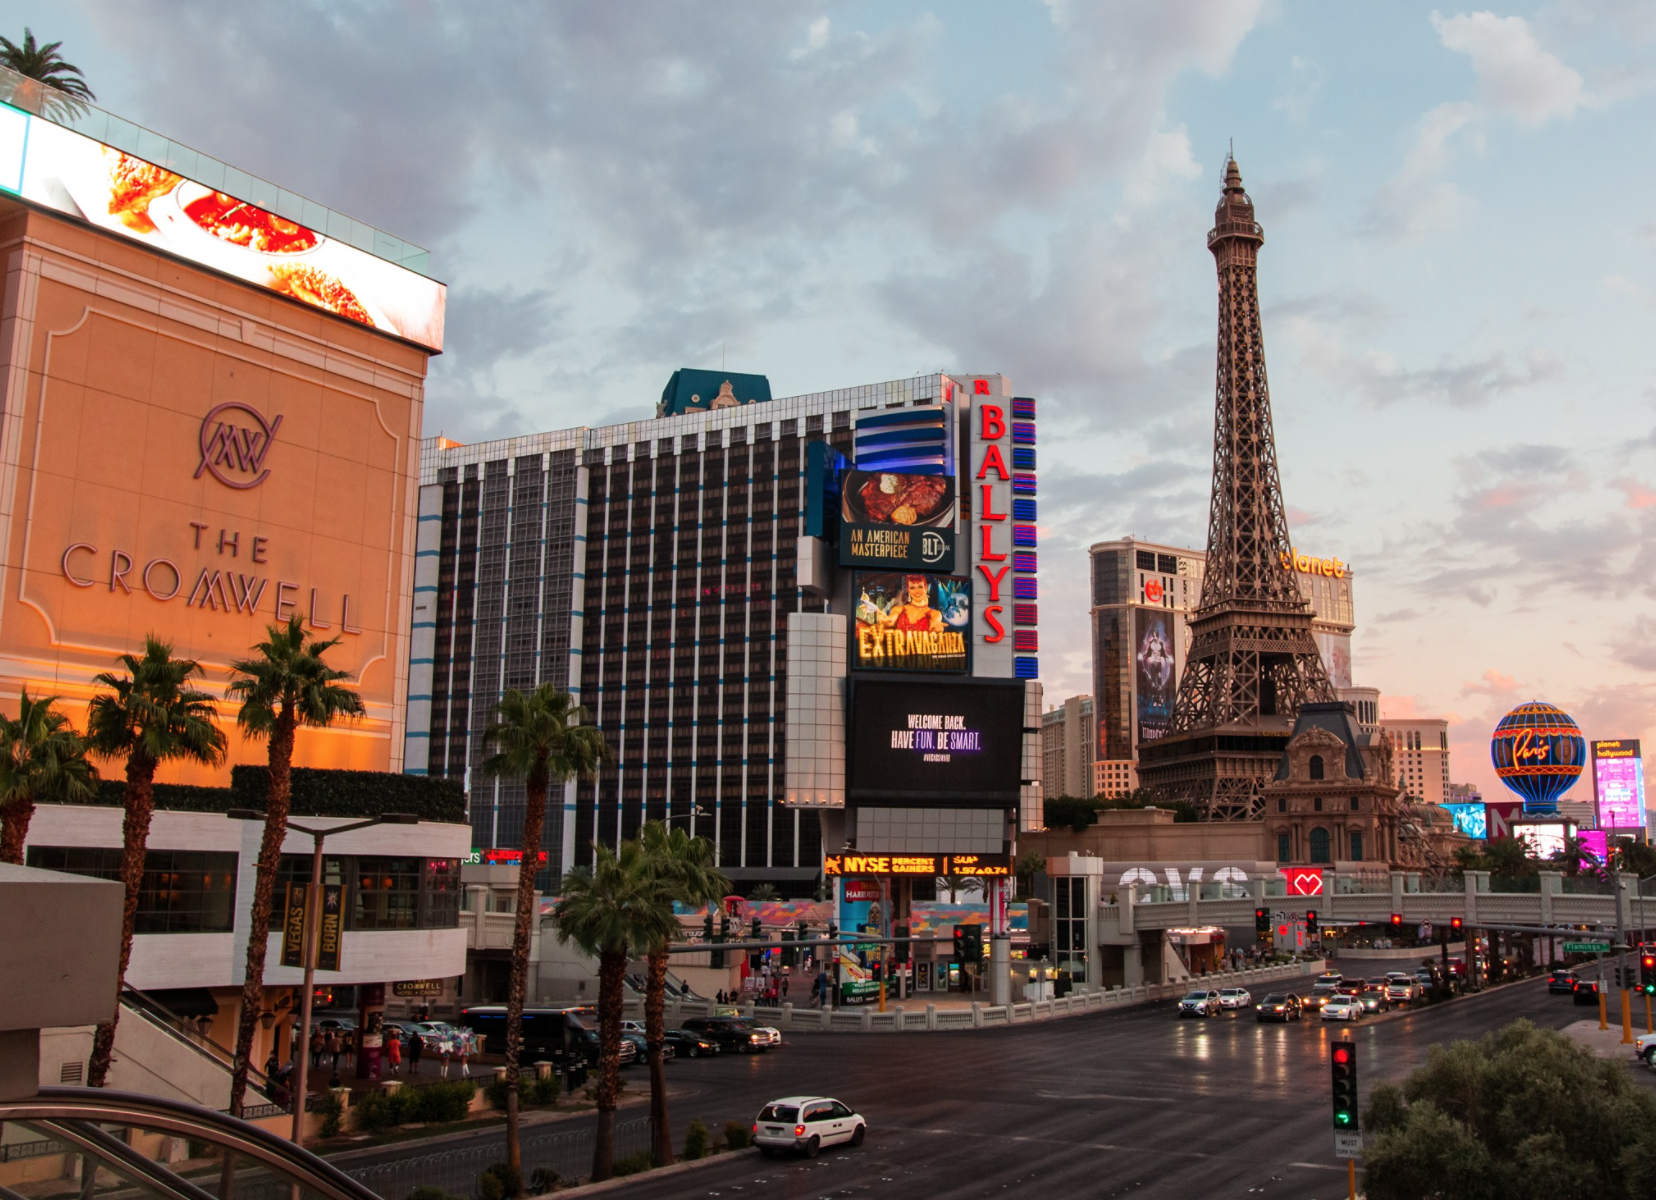 Hotel tower transferring from Horseshoe to Paris Las Vegas